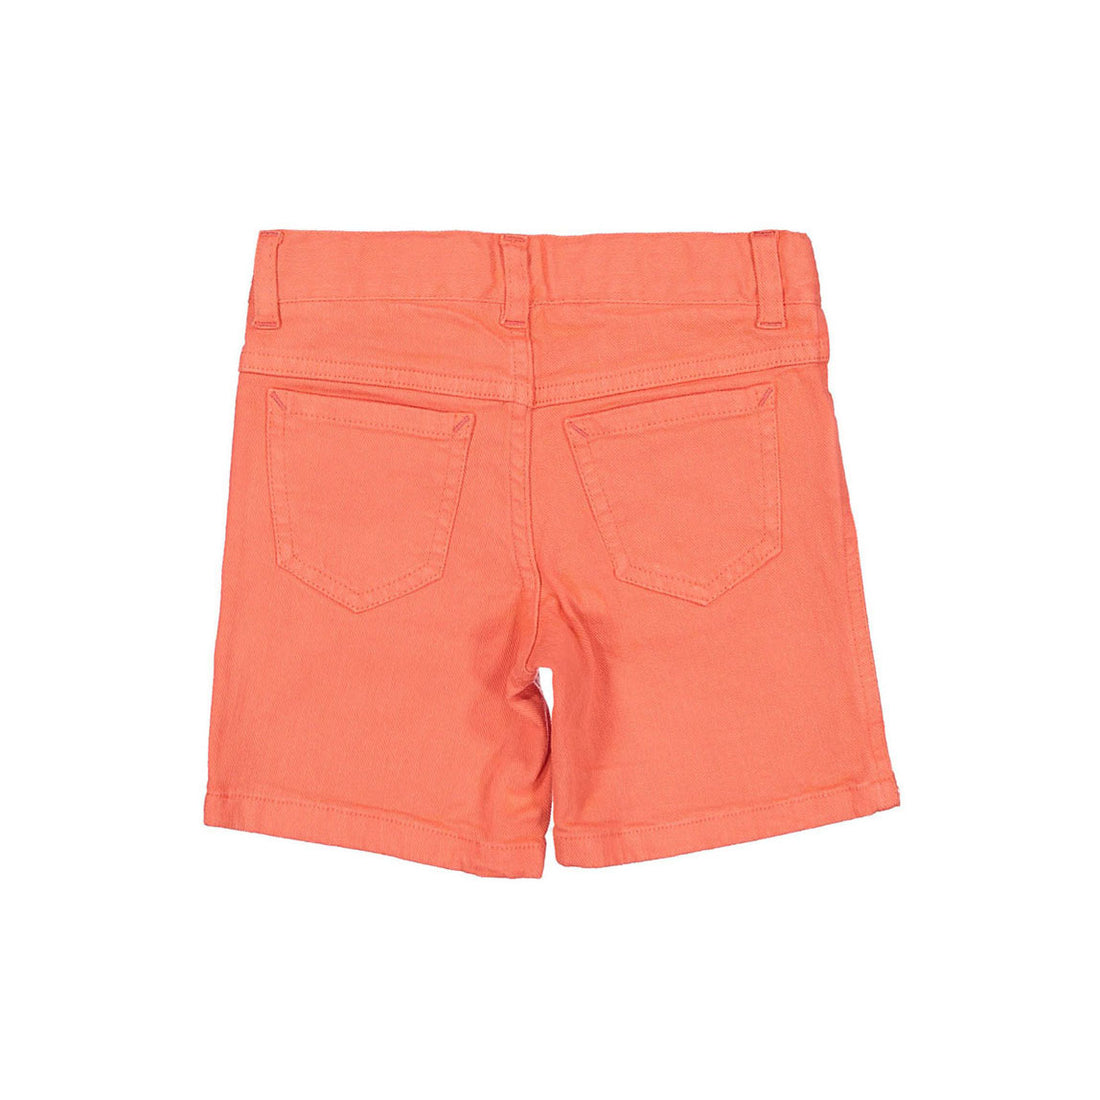 Nanos Orange Shorts